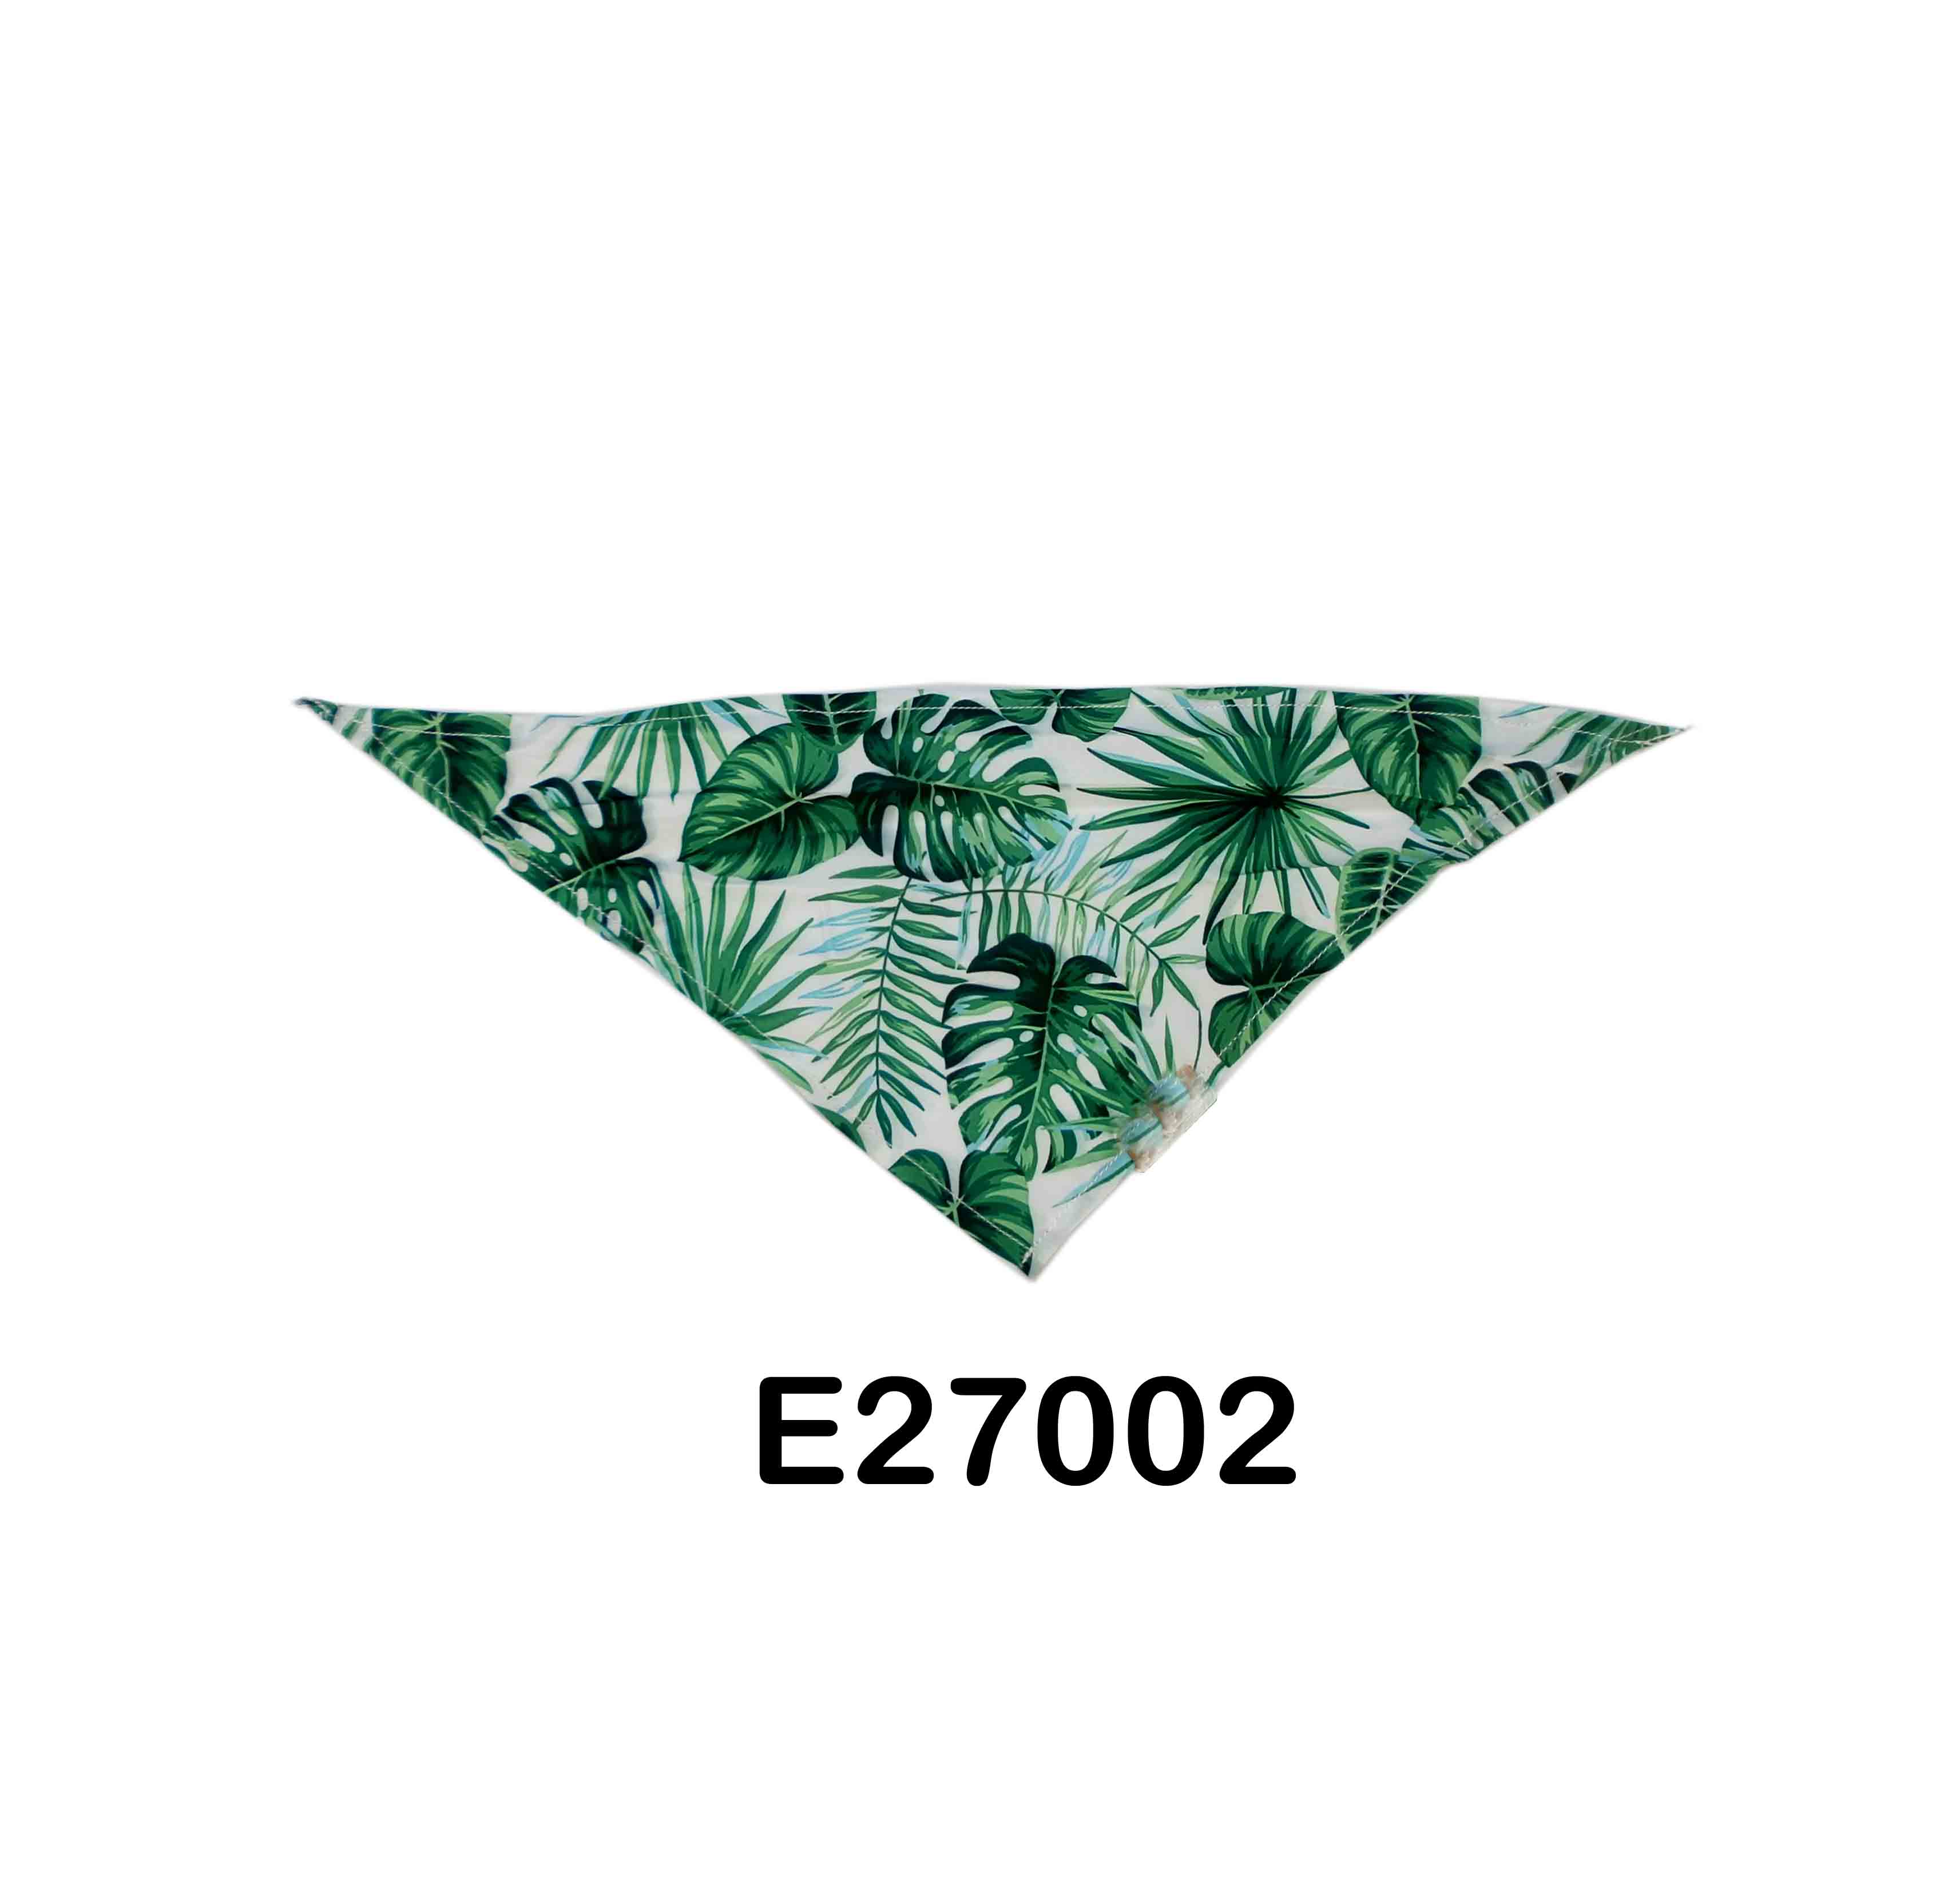 E27002